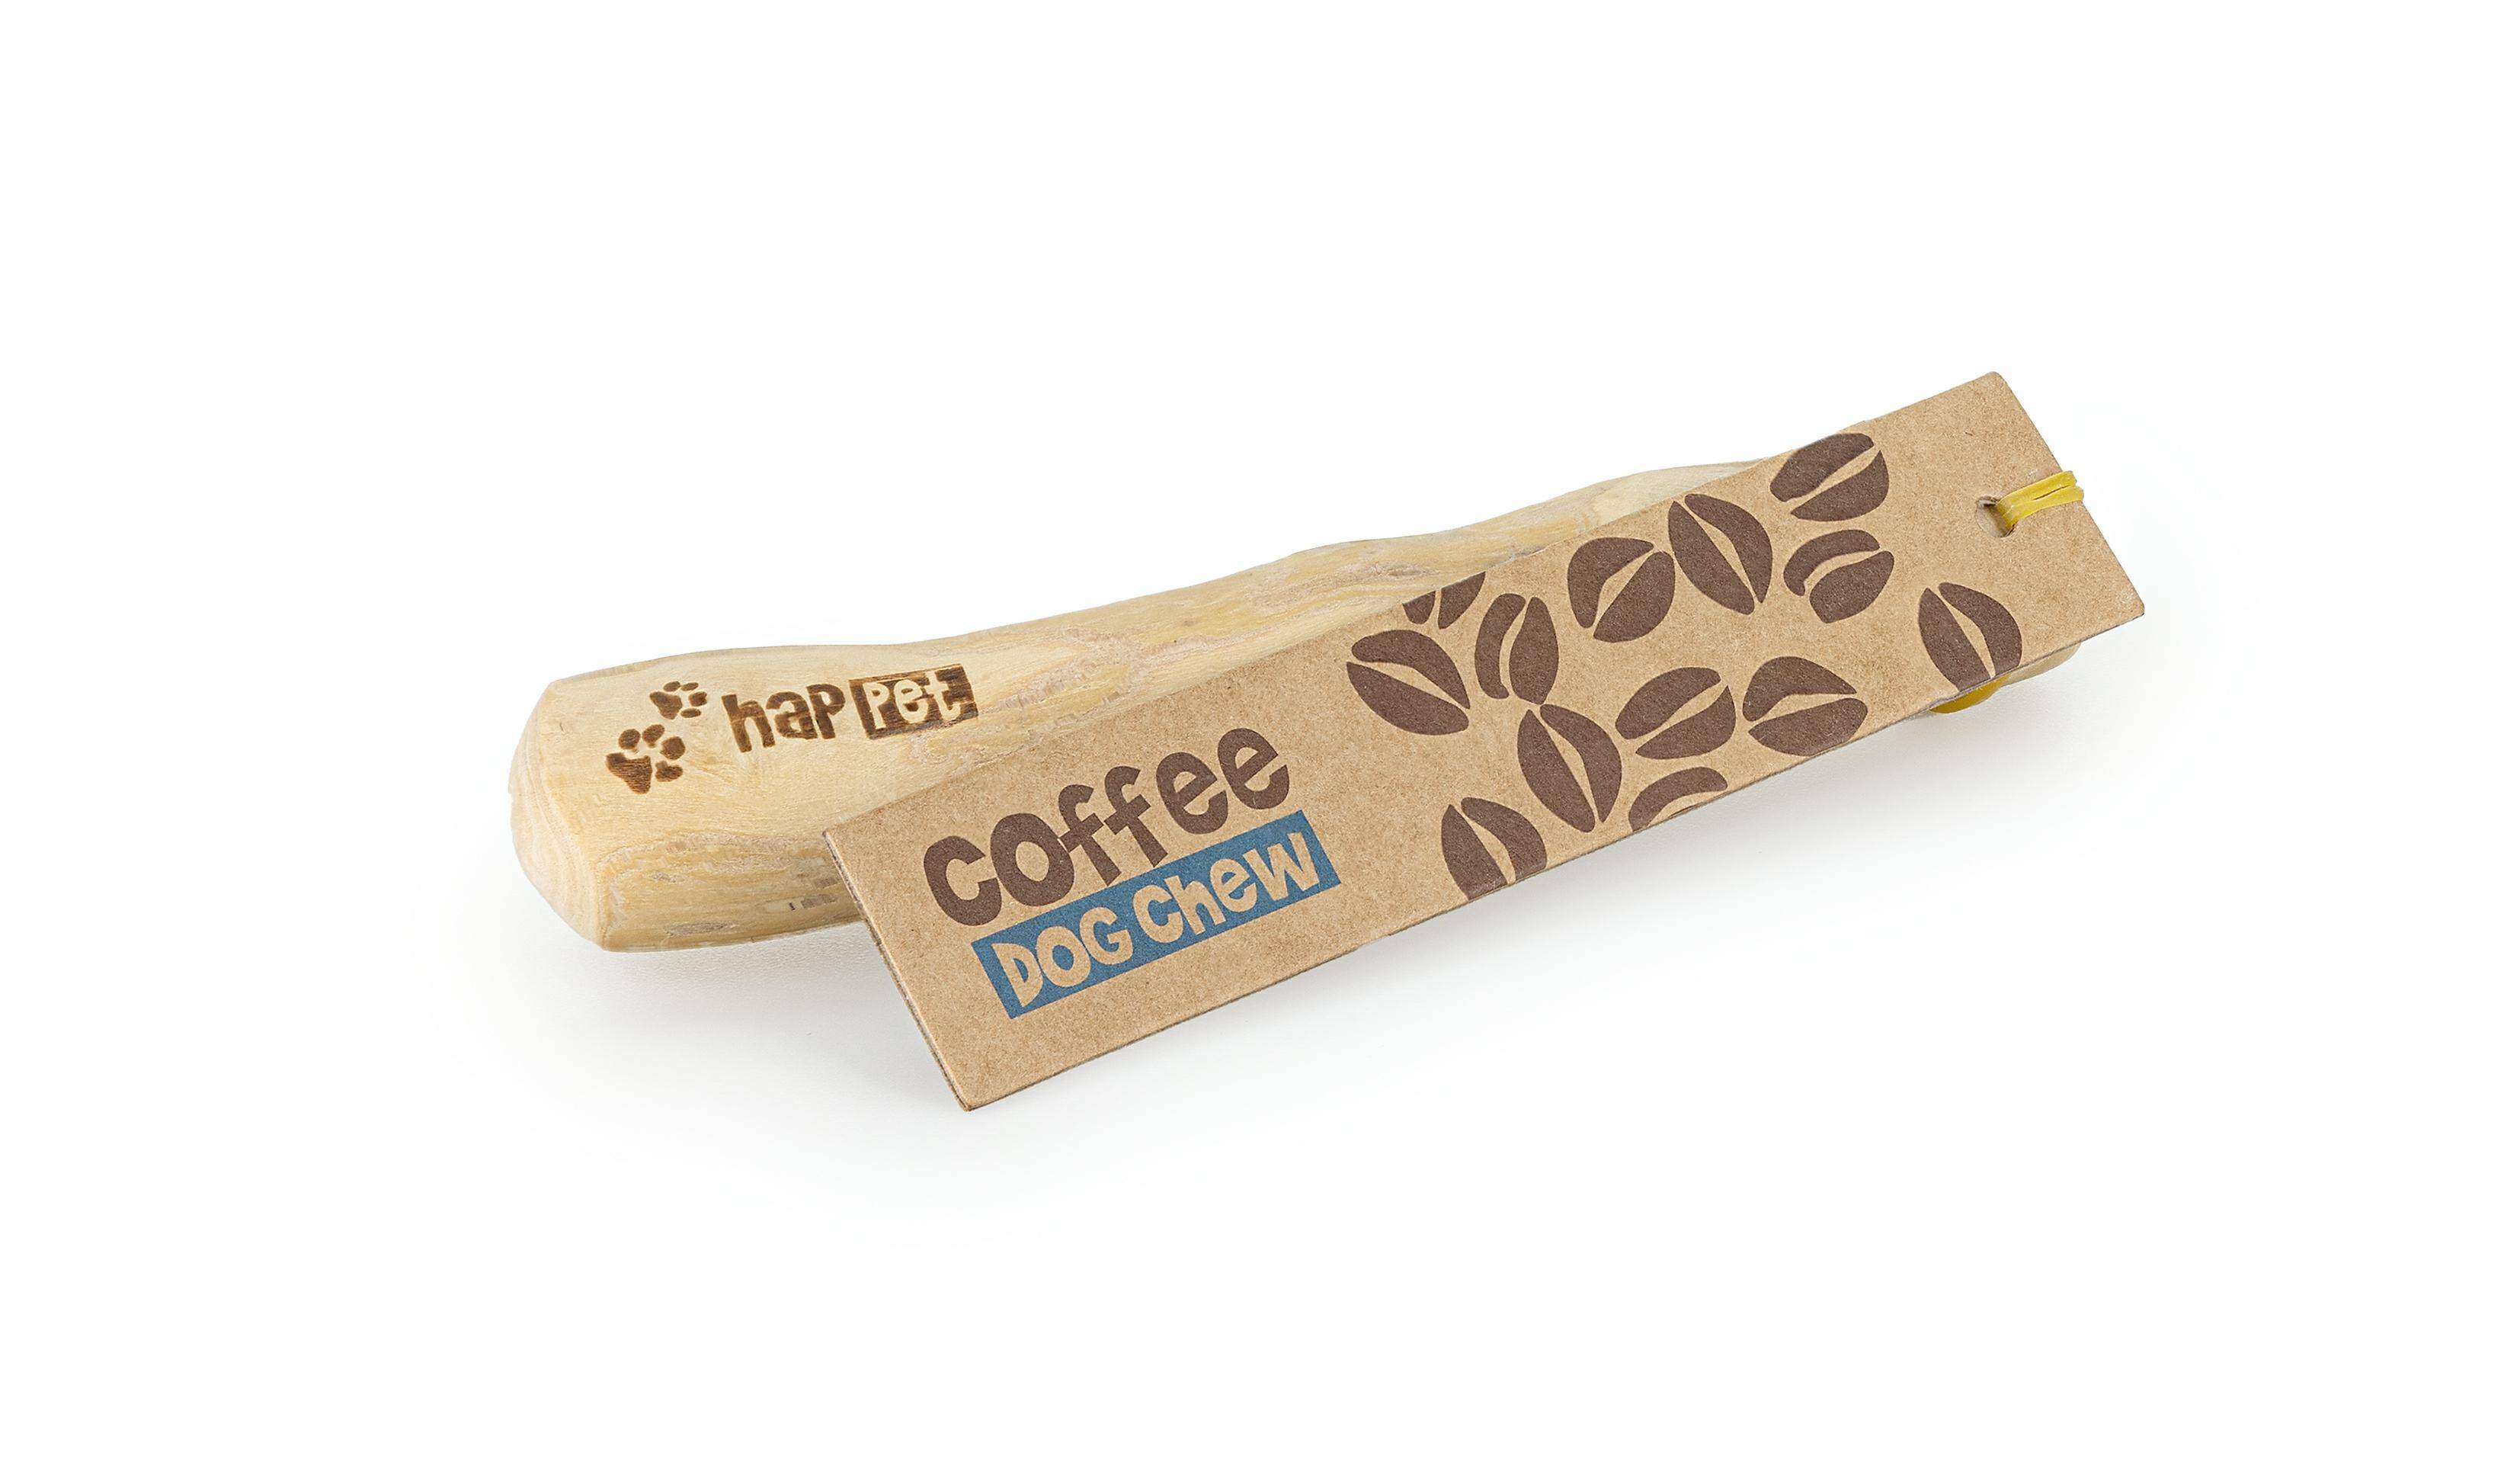 Coffee dog stick S